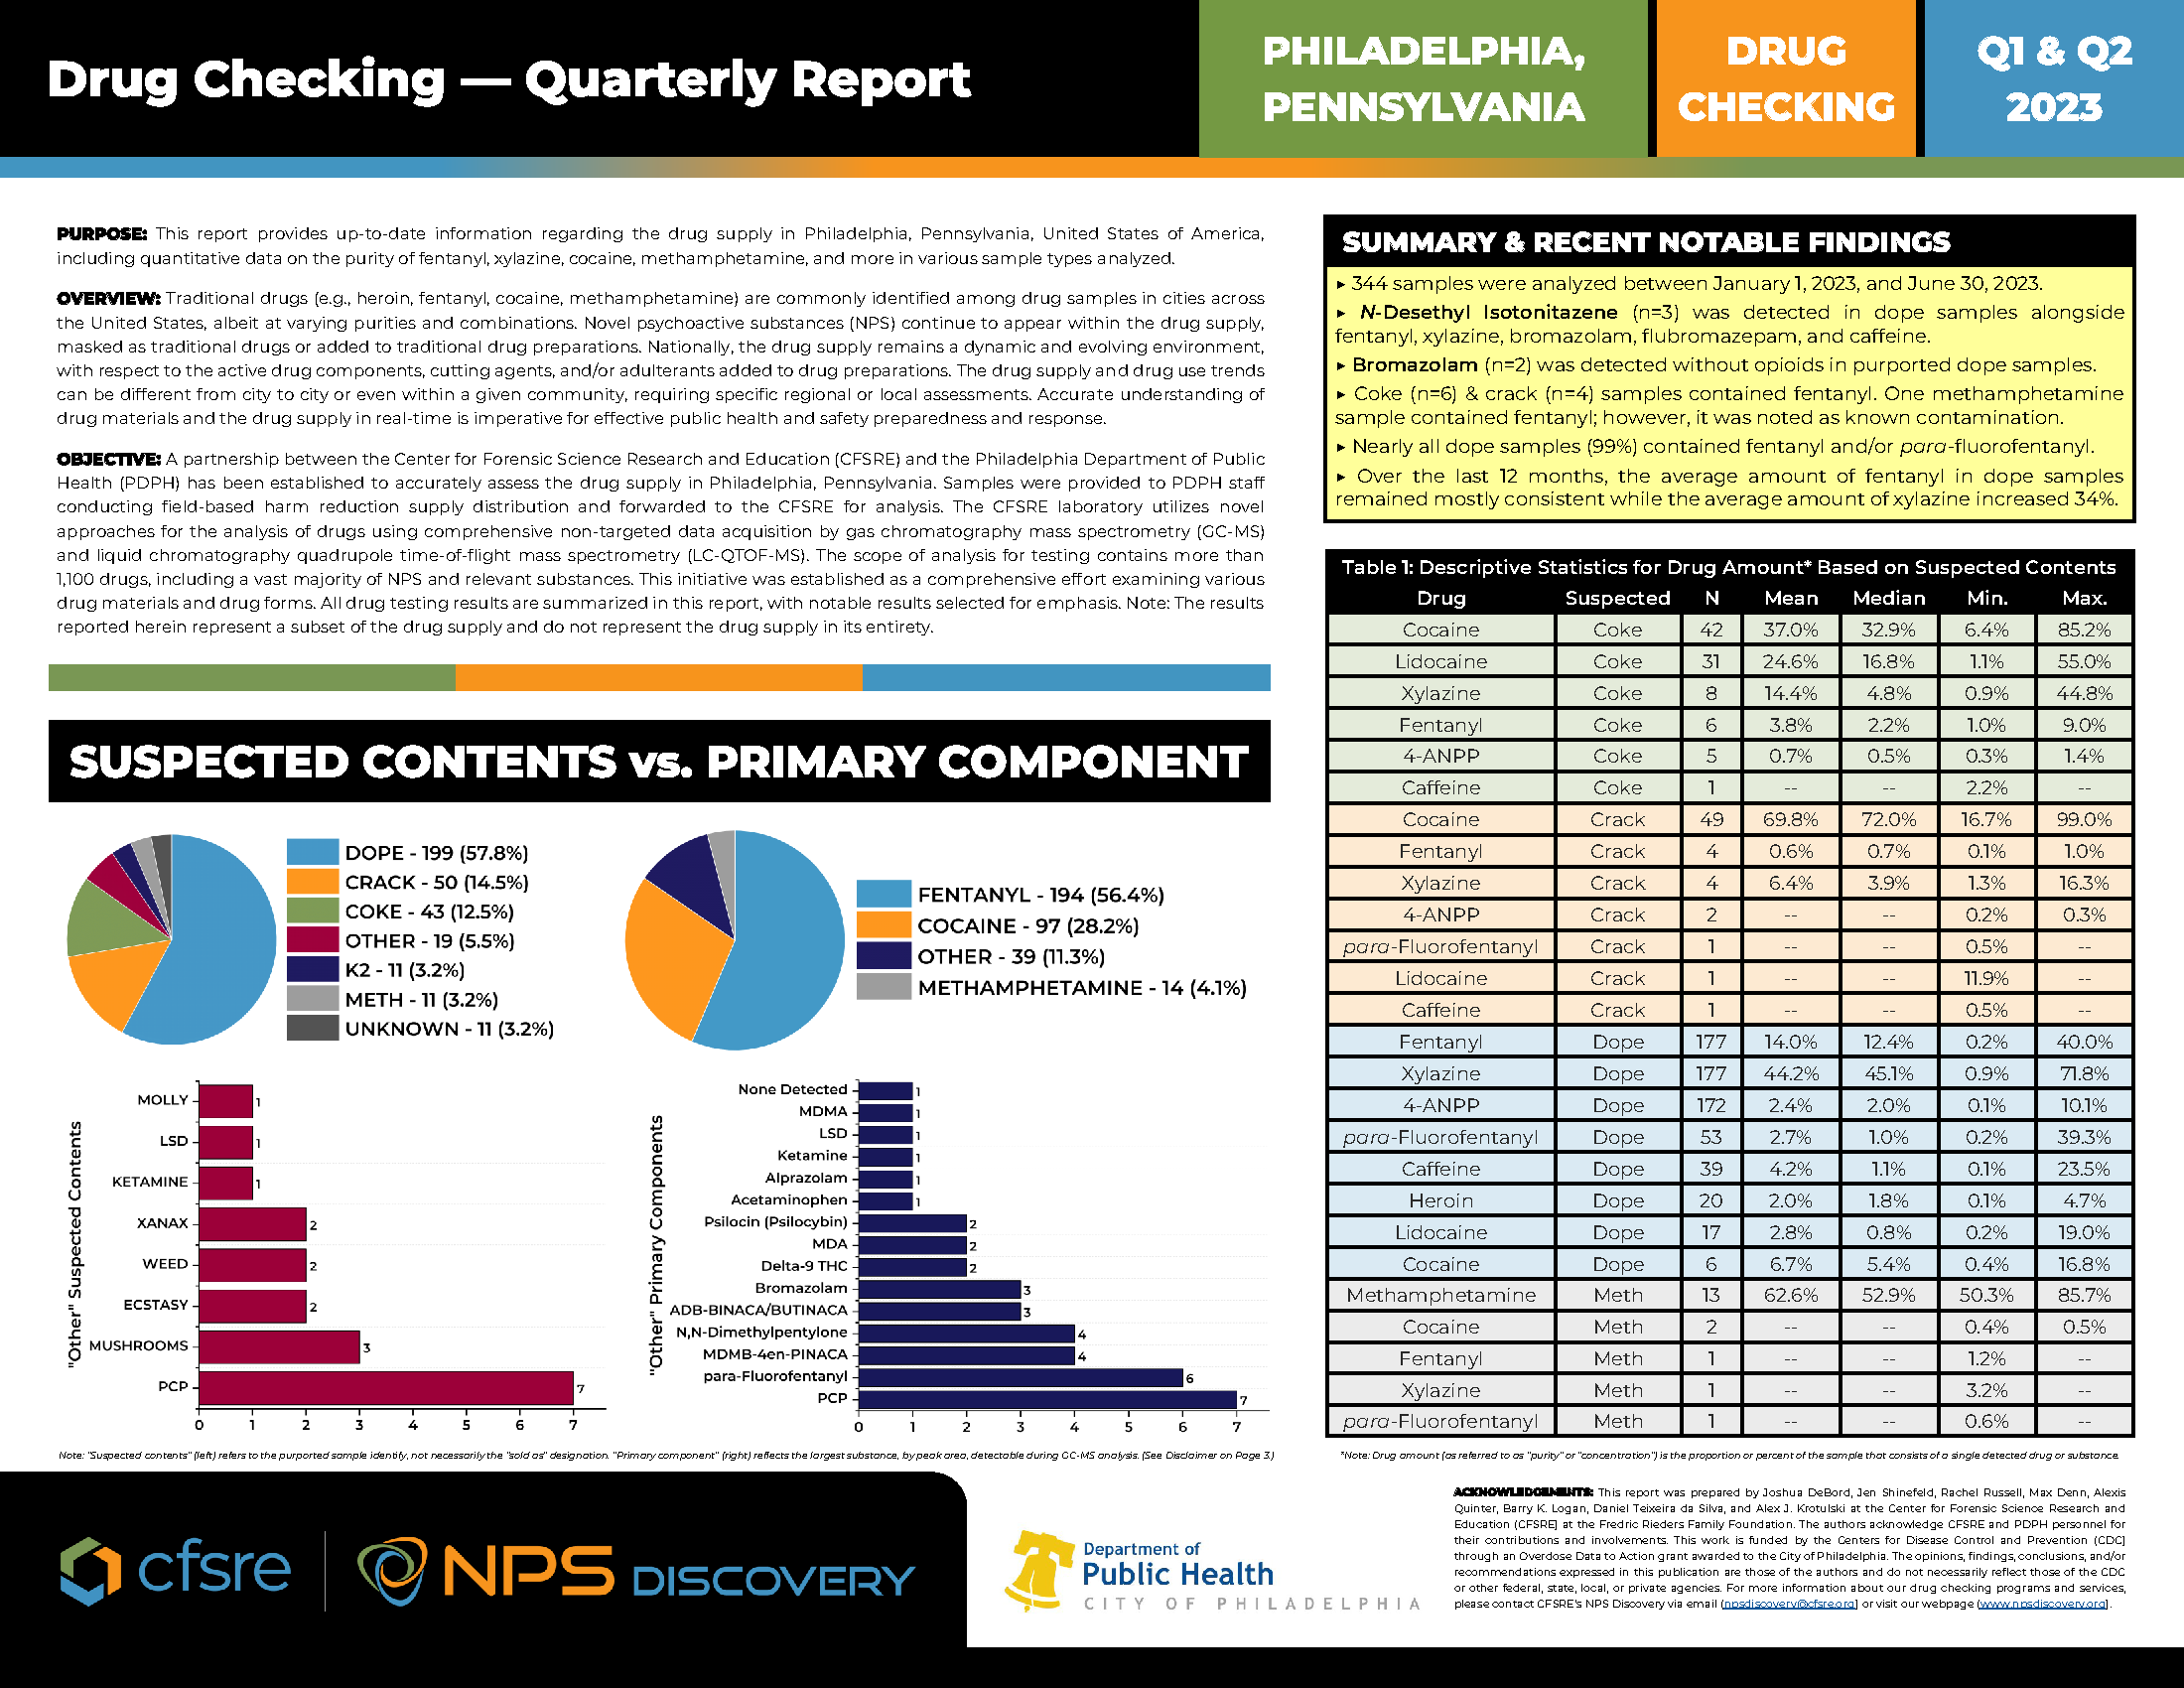 Drug Checking Quarterly Report (Q3 2022): Philadelphia, Pennsylvania, USA